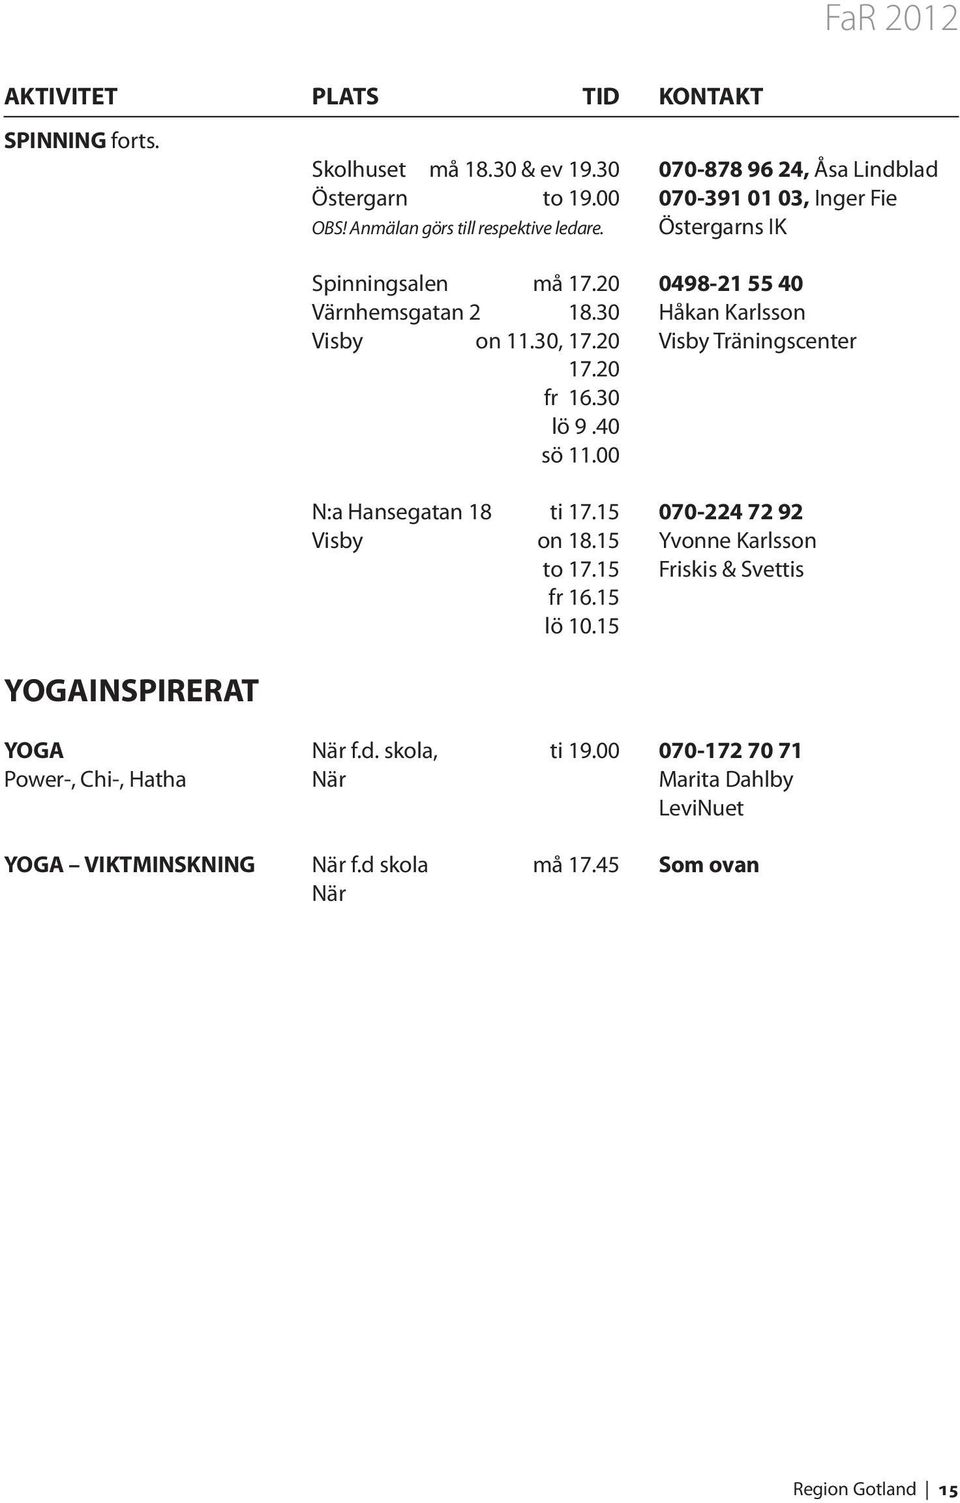 20 Visby Träningscenter 17.20 fr 16.30 lö 9.40 sö 11.00 N:a Hansegatan 18 ti 17.15 070-224 72 92 Visby on 18.15 Yvonne Karlsson to 17.15 Friskis & Svettis fr 16.